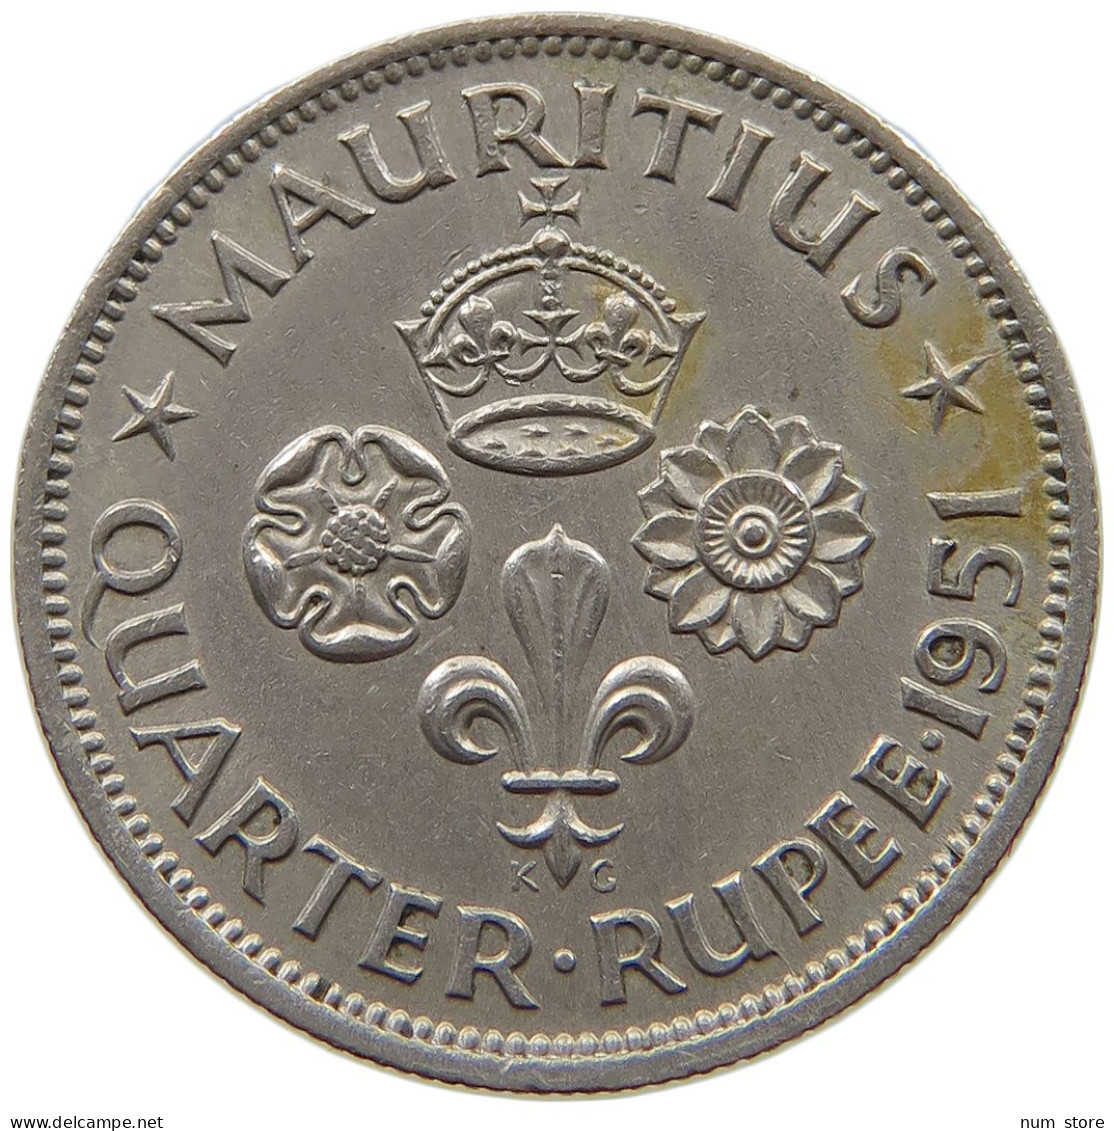 MAURITIUS 1/4 RUPEE 1951 George VI. (1936-1952) #a090 0445 - Maurice